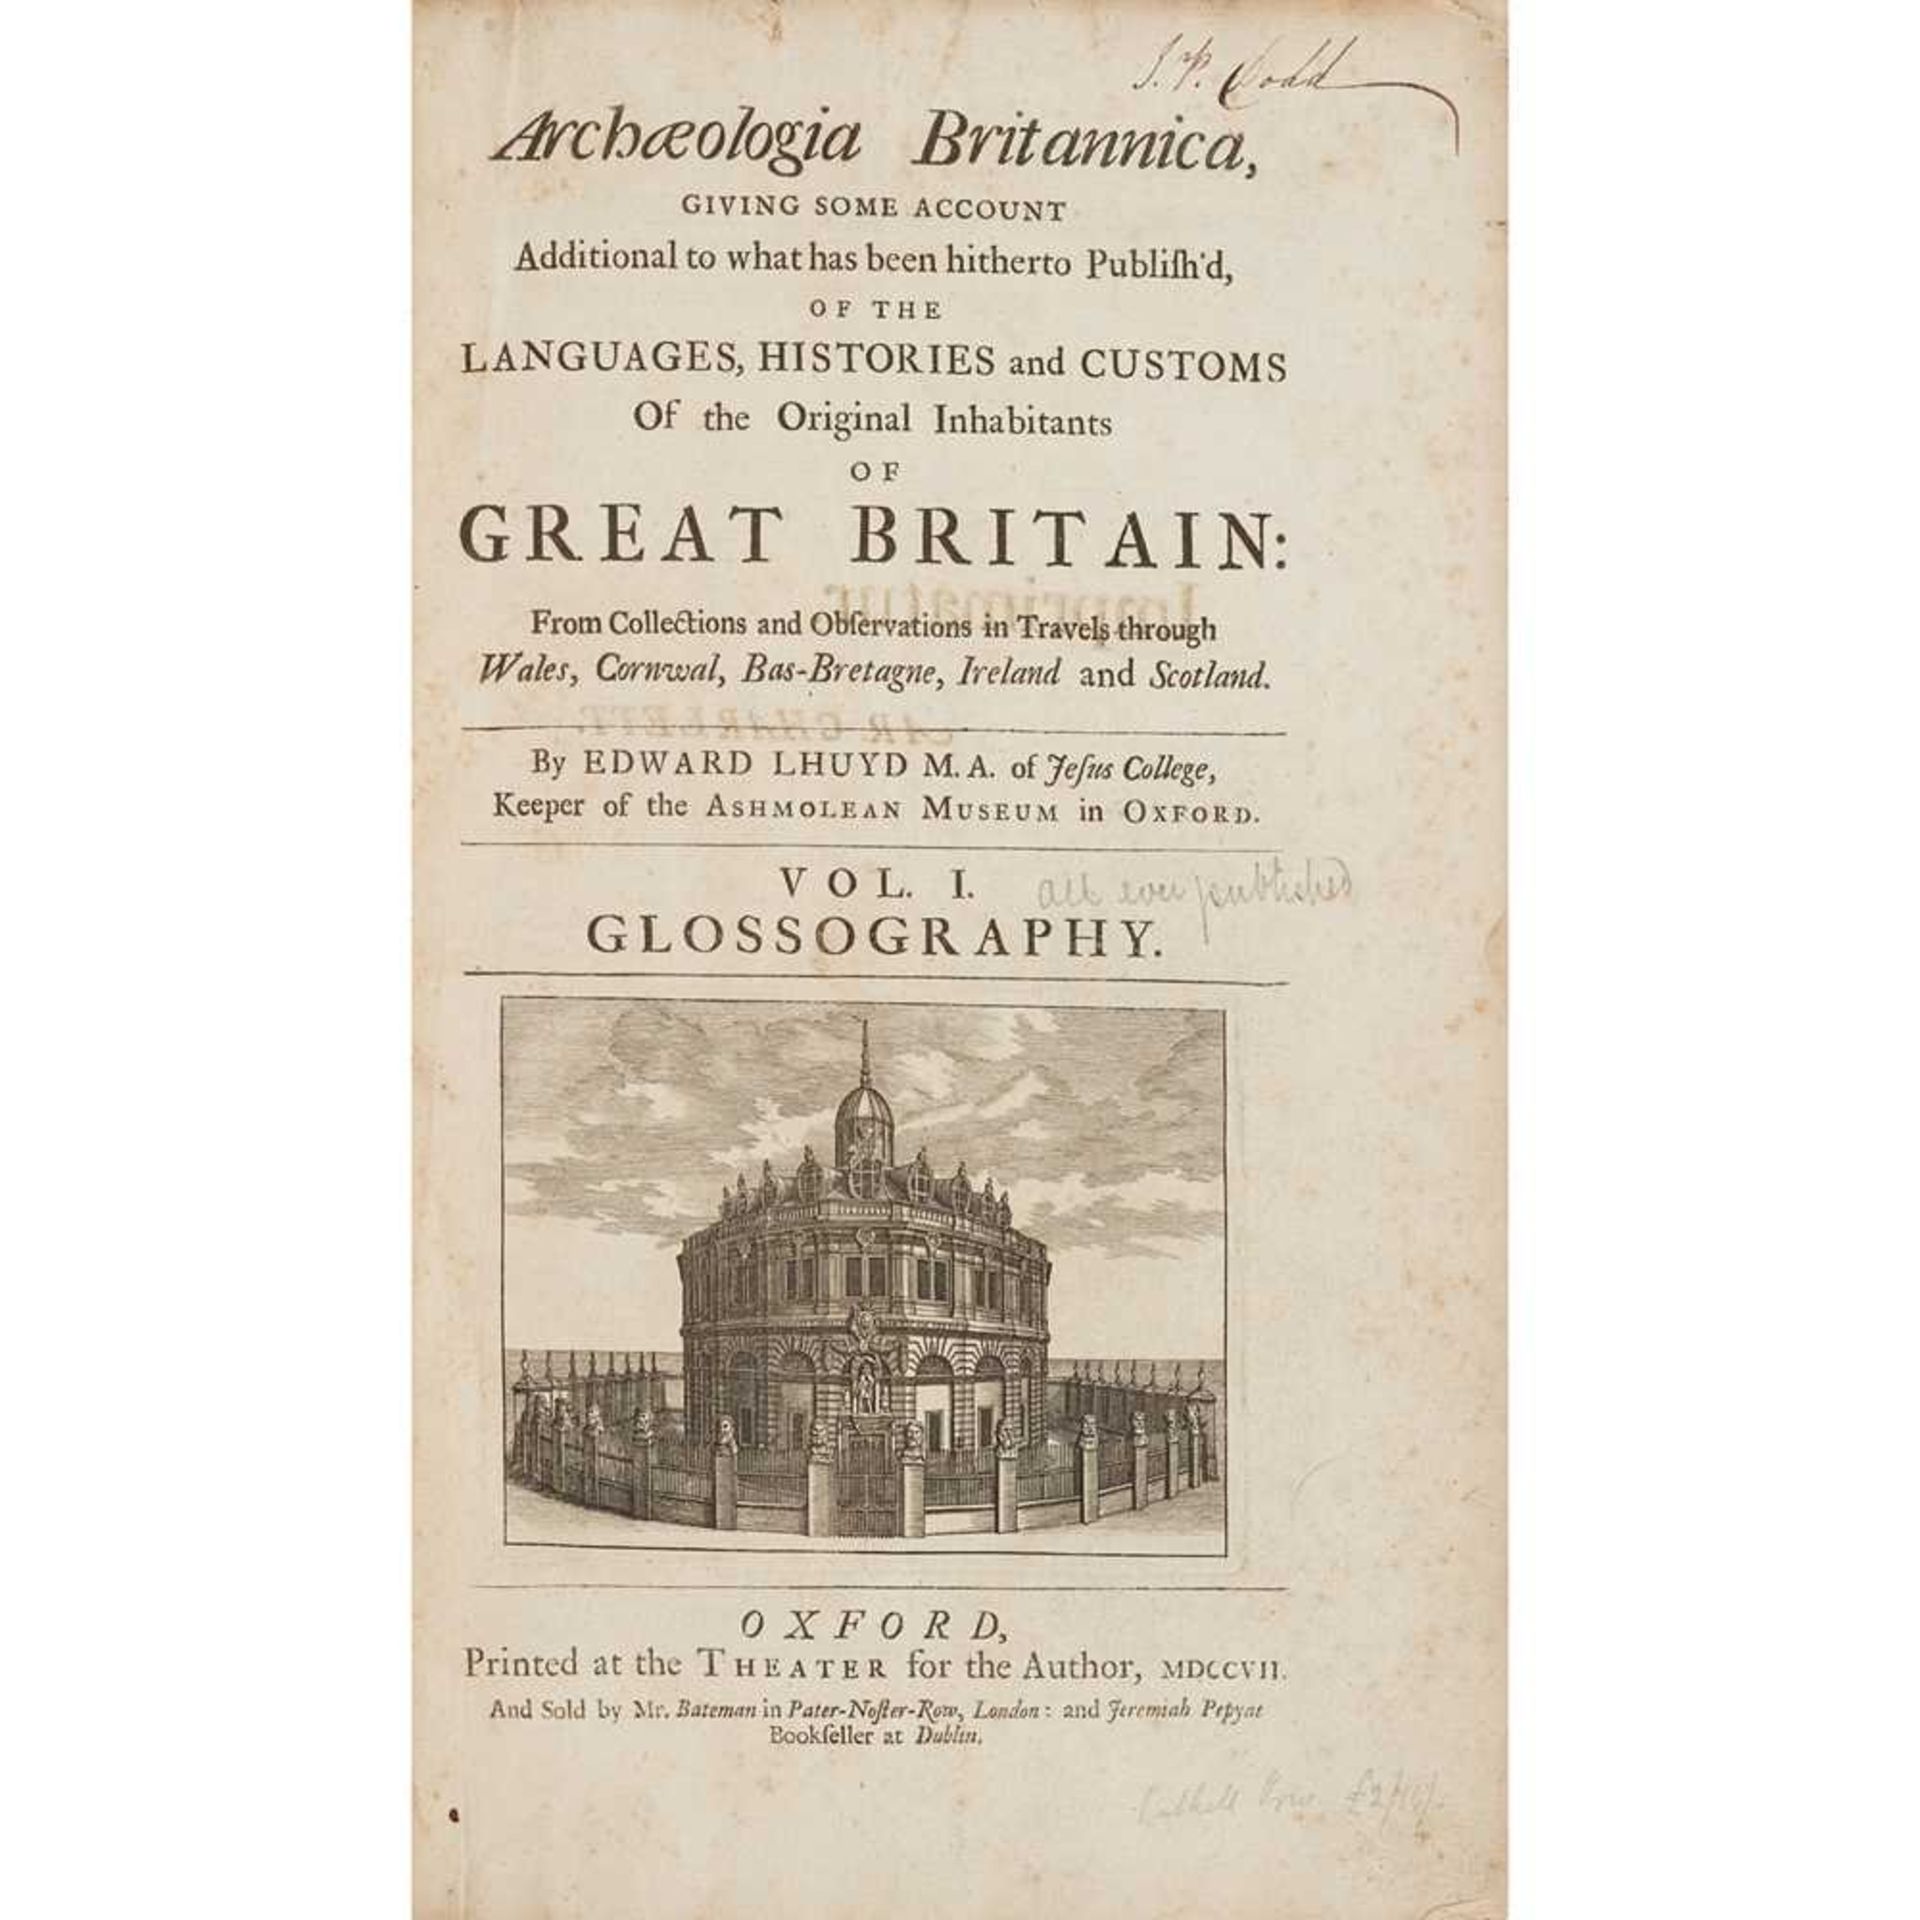 Lhuyd, Edward Archaeologia Britannica volume 1: Glossography [all published]. Oxford: M. Bateman,